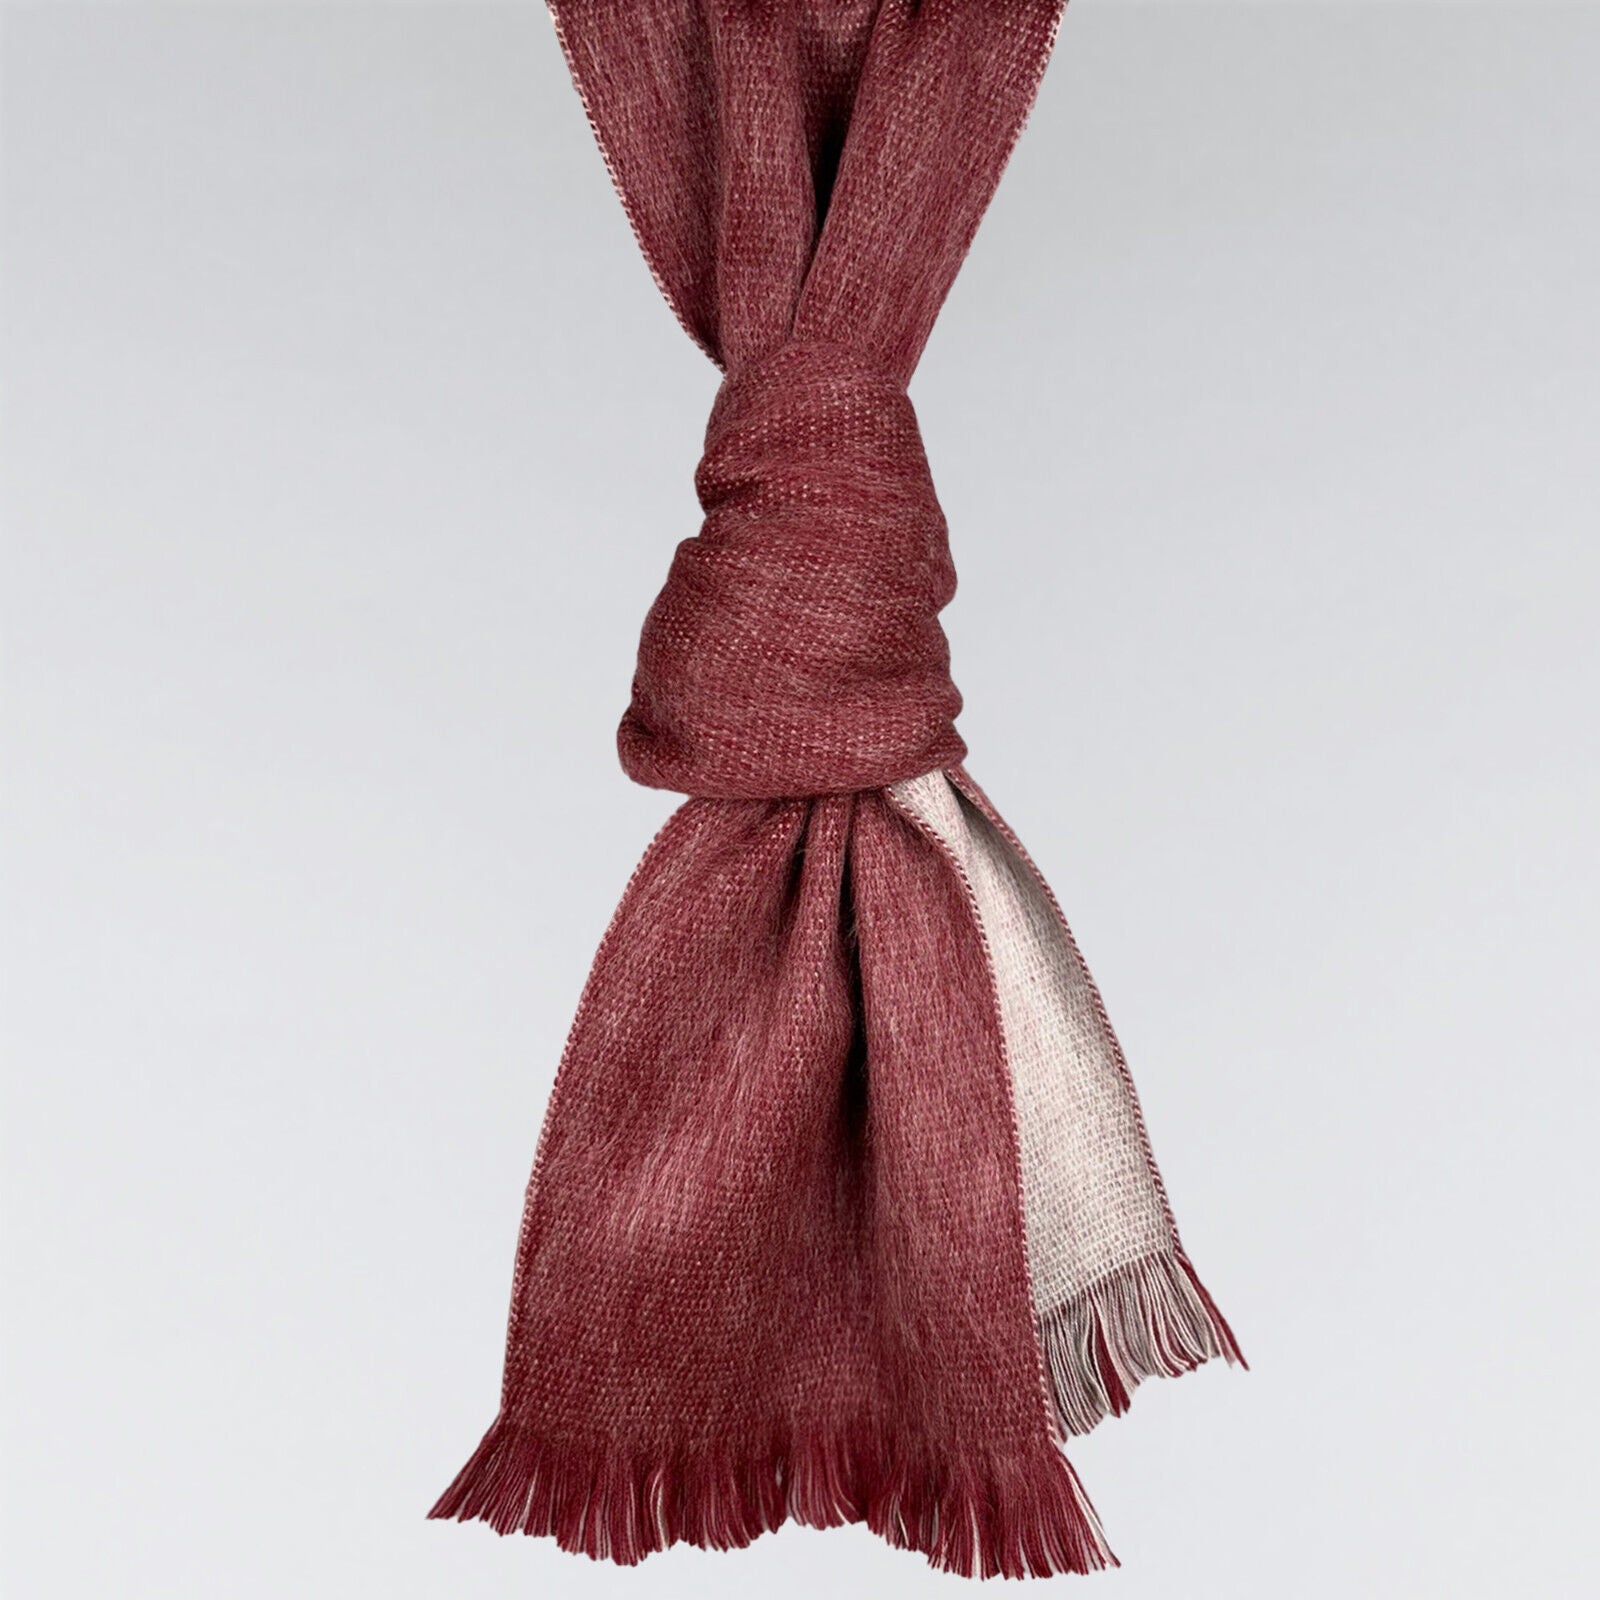 Alpaca Wool Scarves - Dual-Tone, Brushed Finish - Authentic Ecuadorian Craft